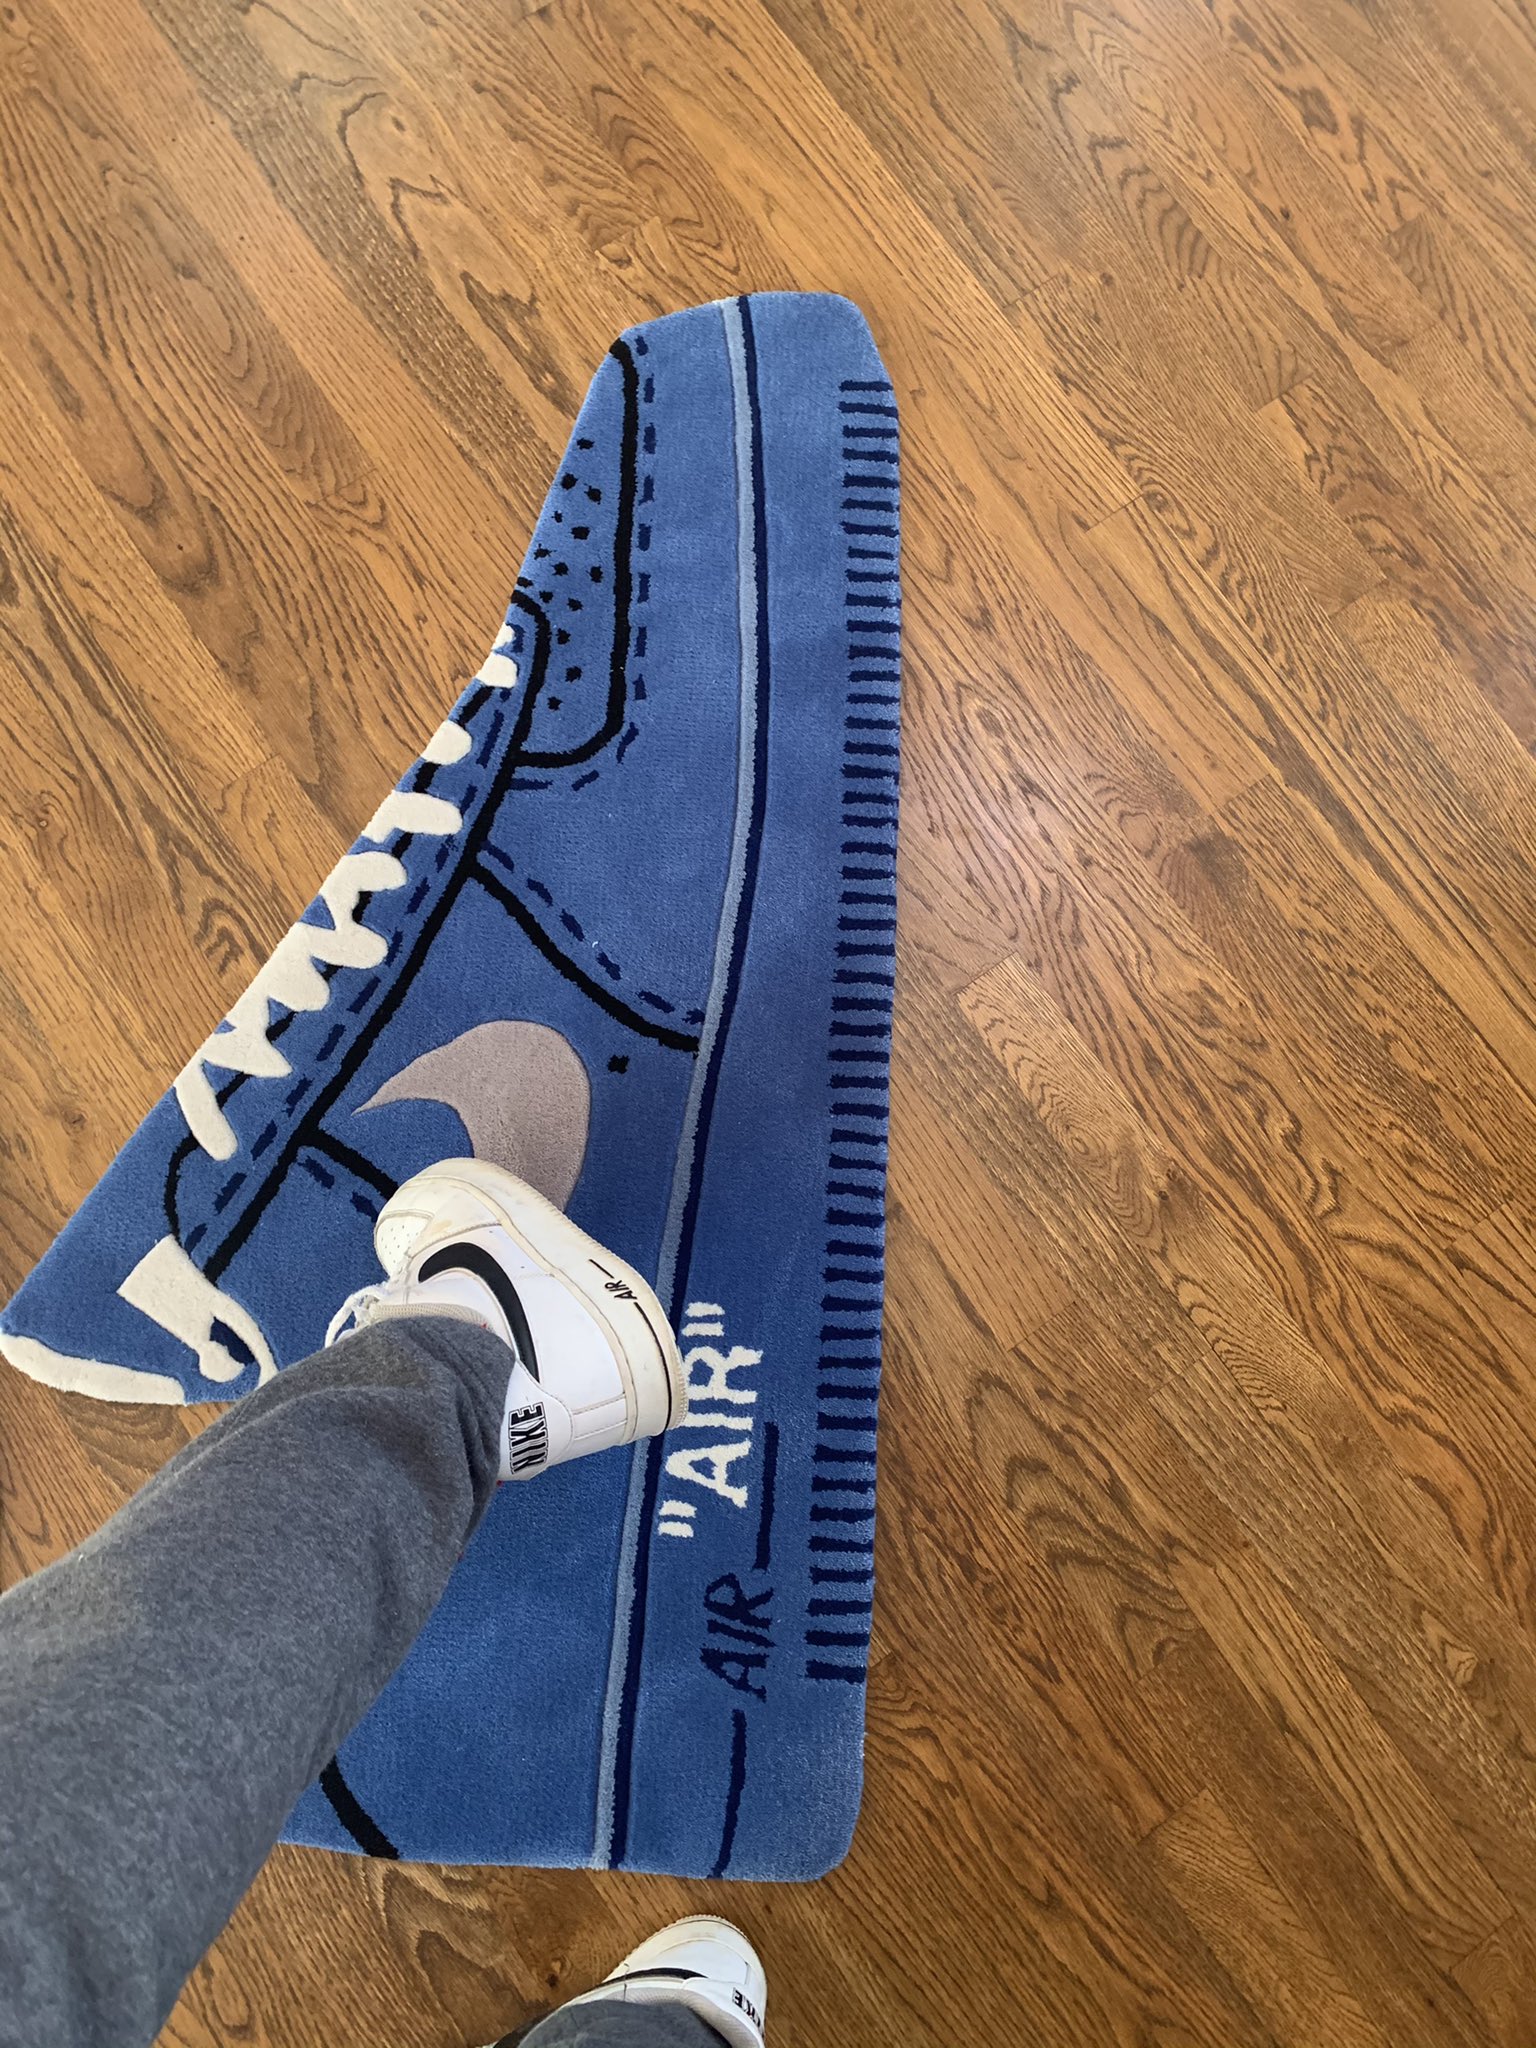 OBSIDIANS BLUE SHOE Rug , Custom Shoe , Handtufted , Sneakerhead